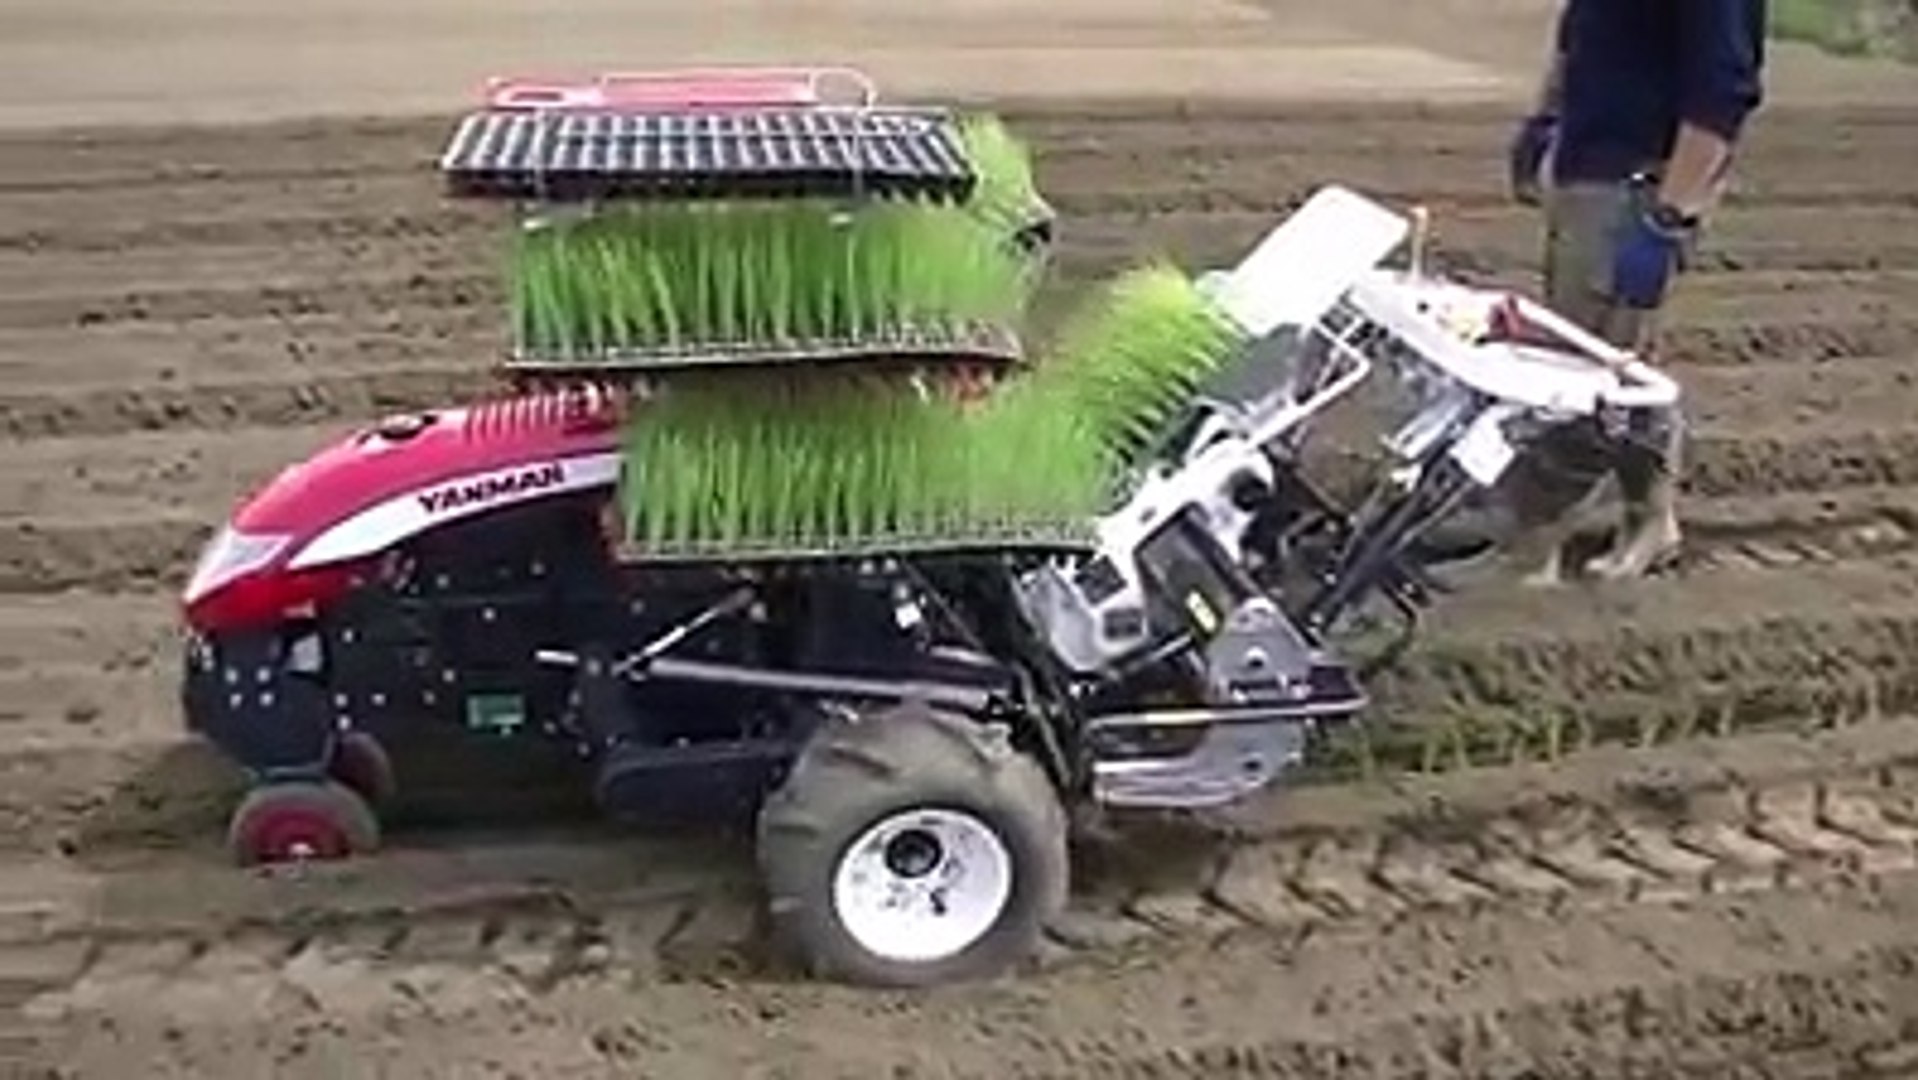 Agriculture Machines - CompilationSource:  CocktailVP.com